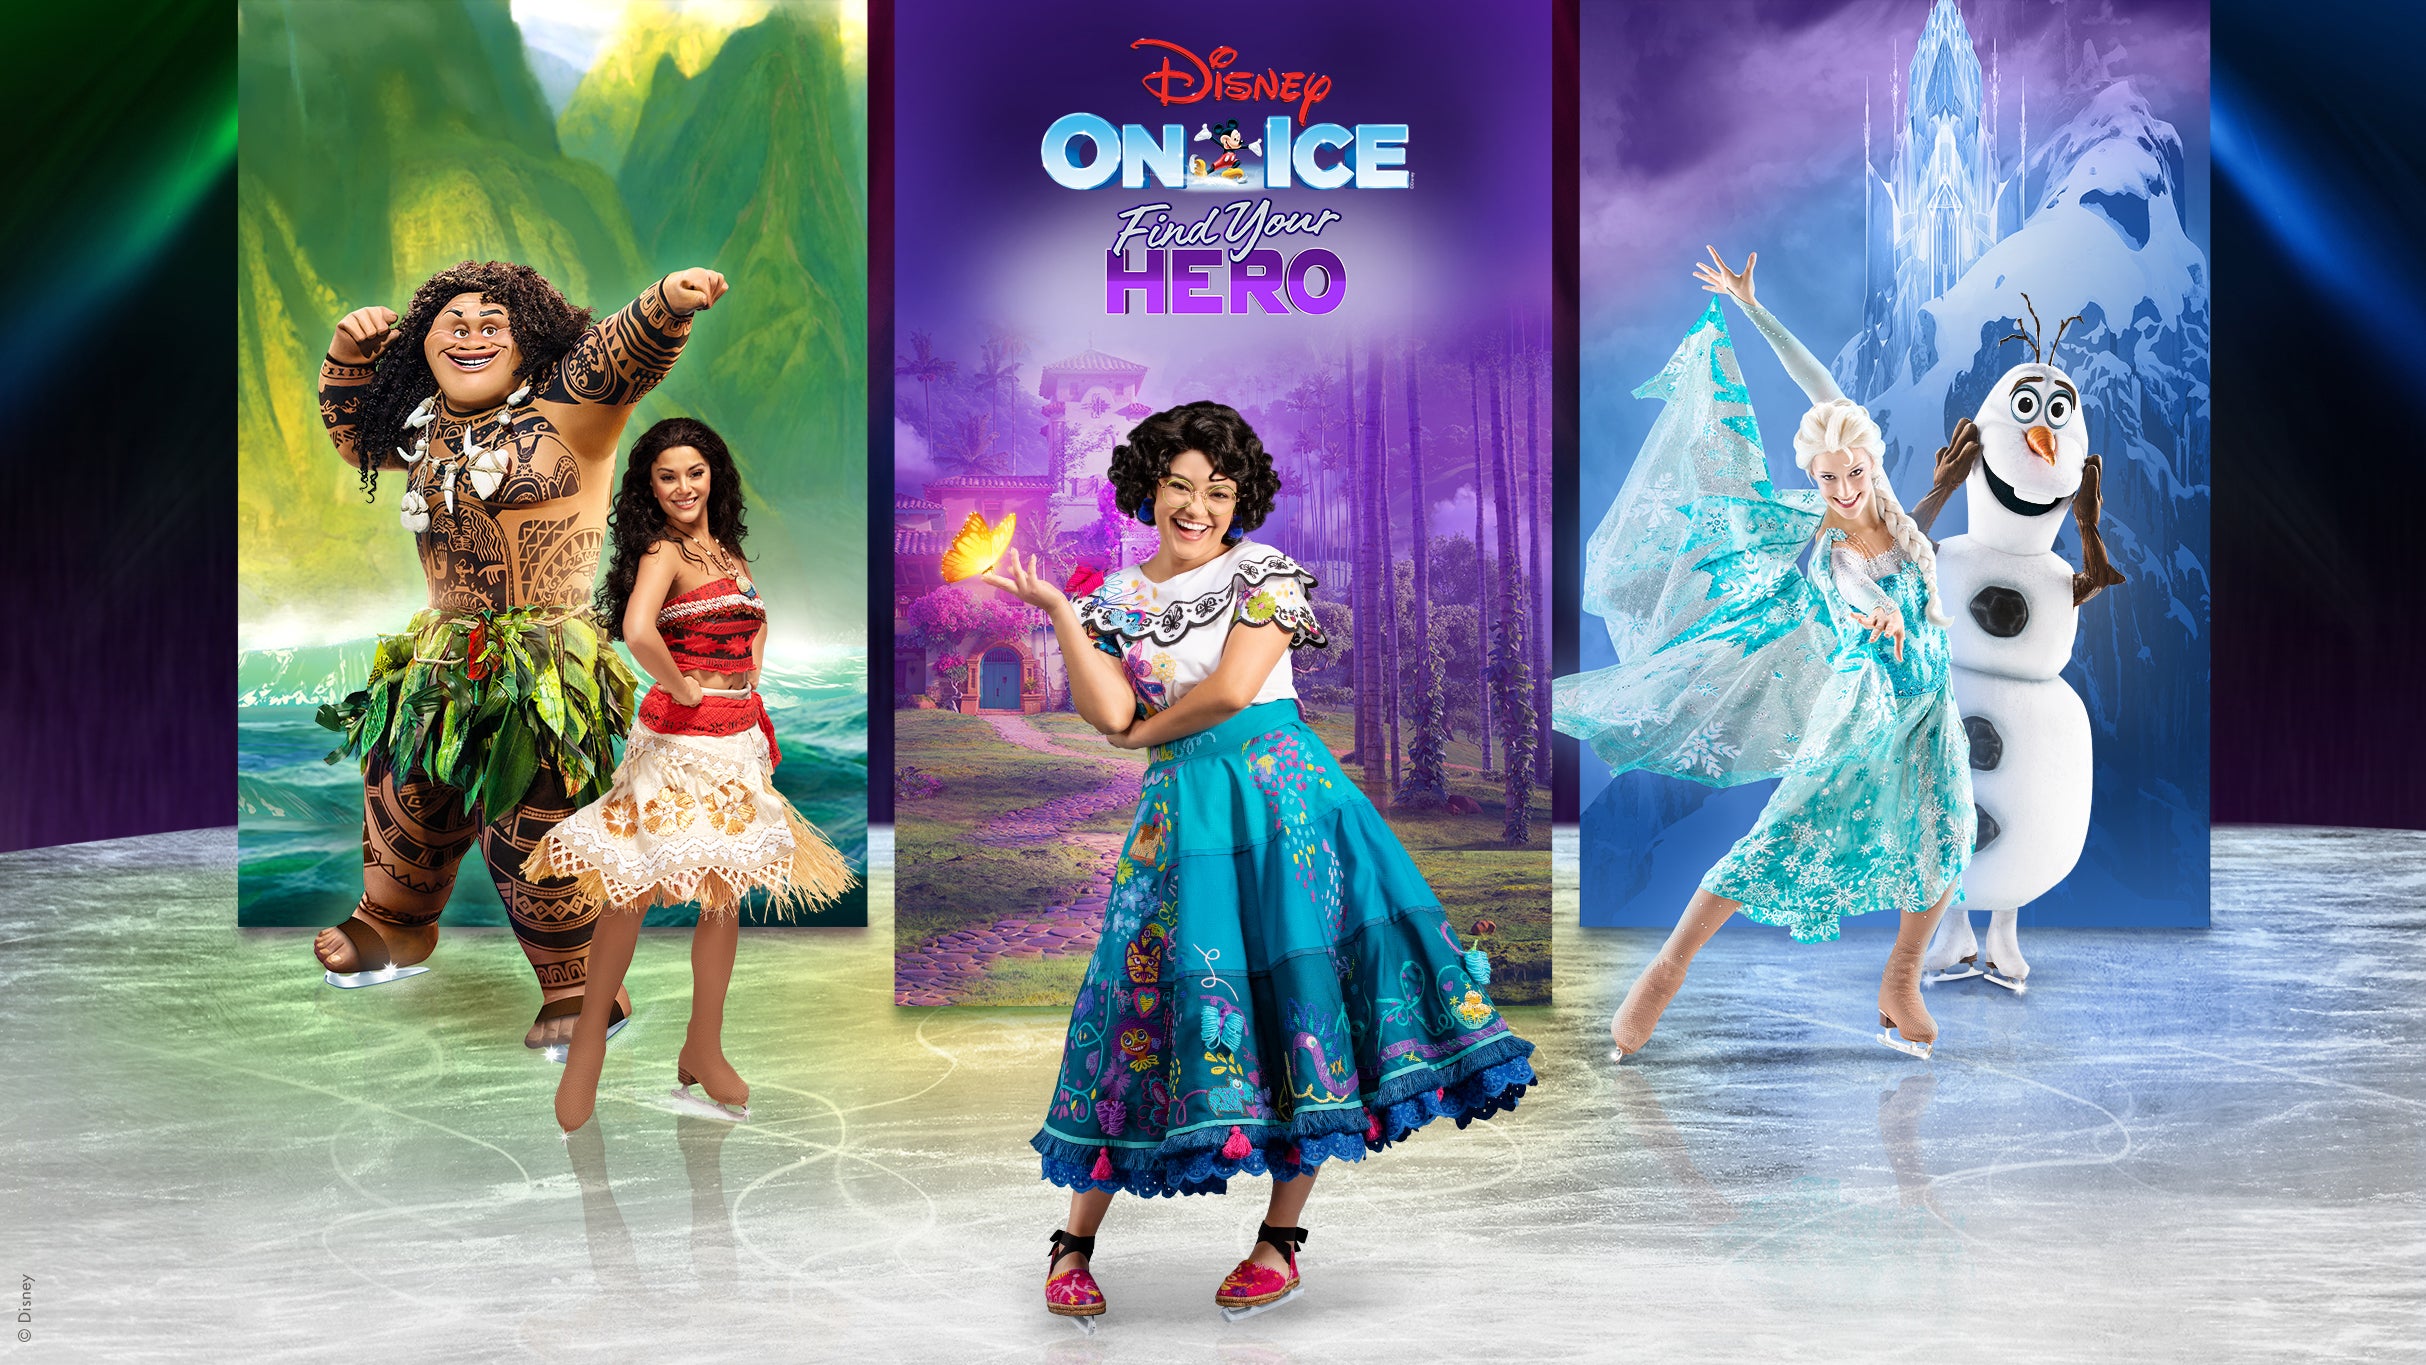 Disney On Ice presents Find Your Hero free presale code